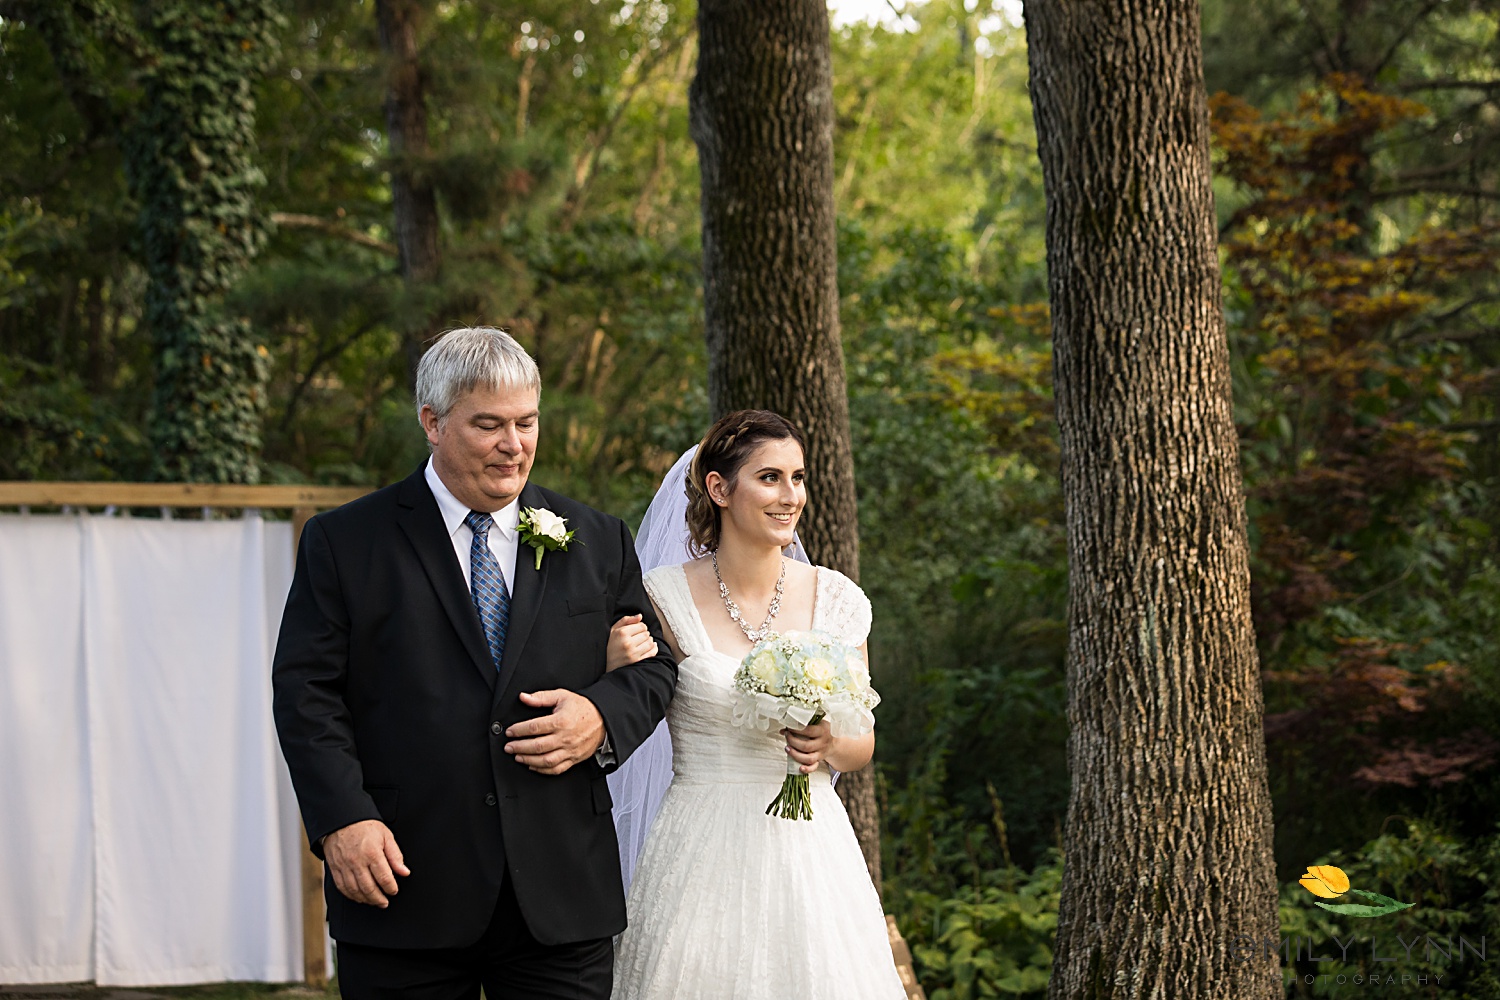 Ceremony photo. Wedding-Photos-at-Enchanted-Acres-KC-Wedding-Photographer-Emily-Lynn-Photography.